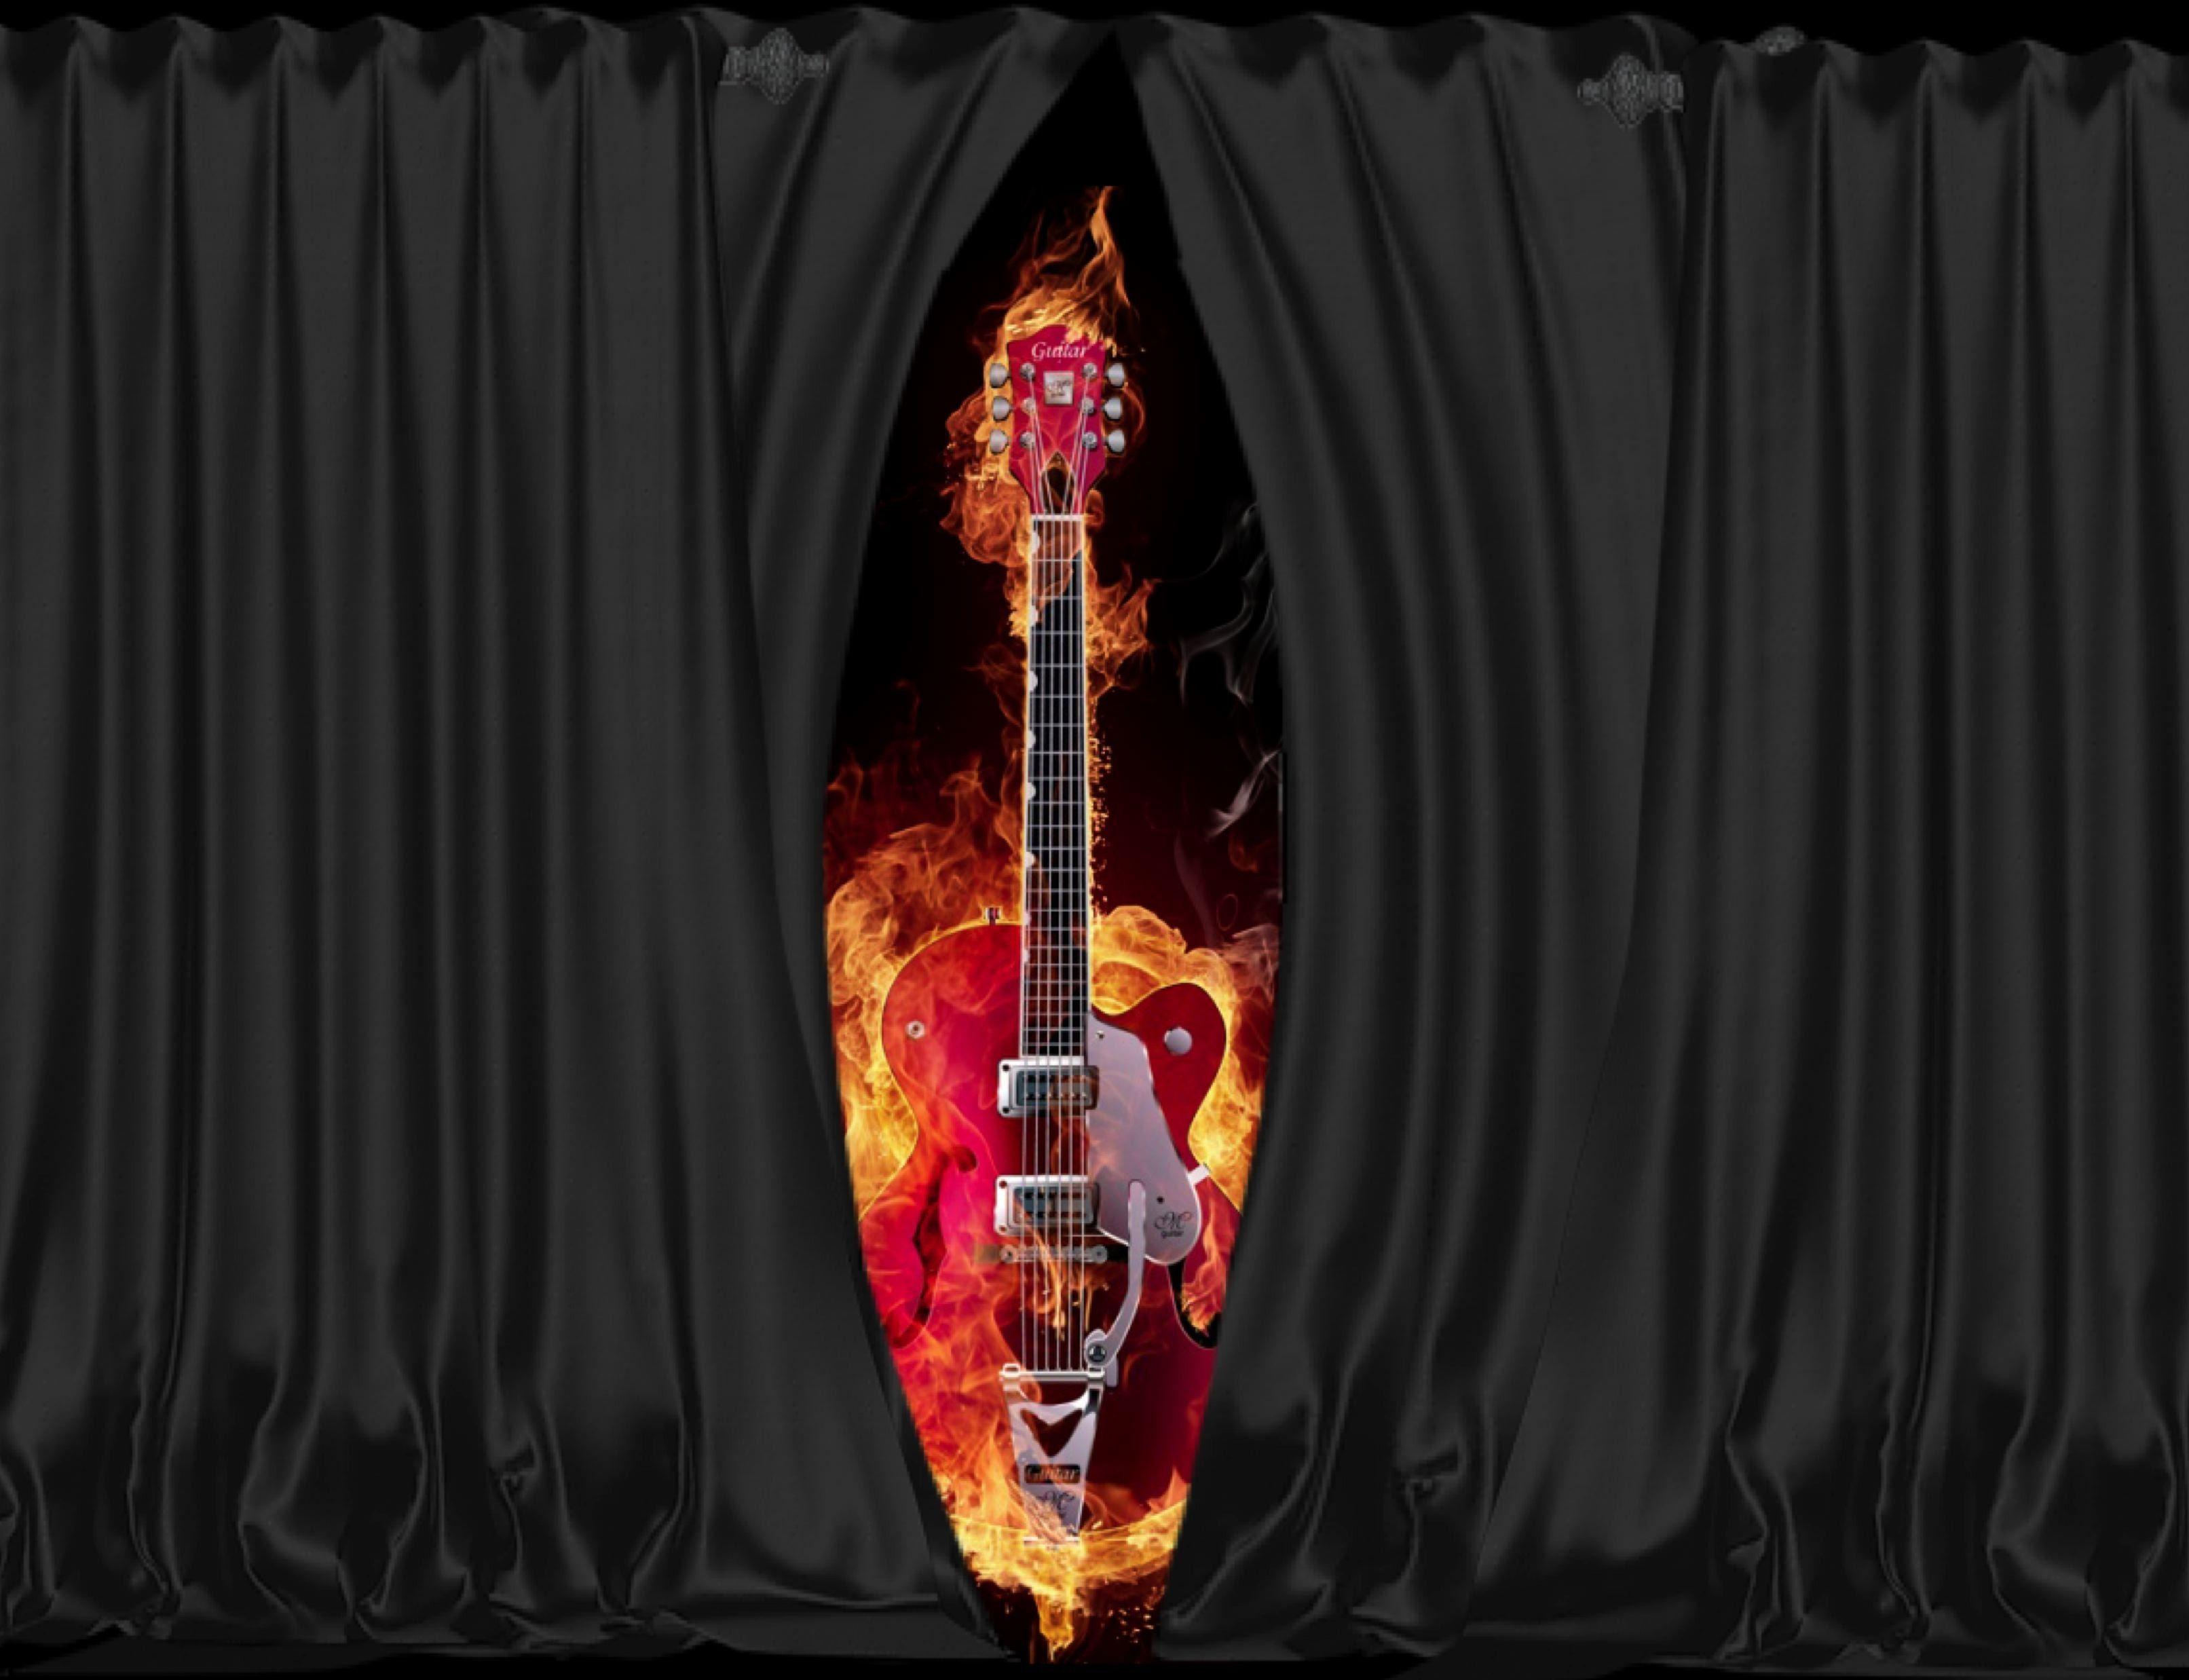 Burning guitar wallpaper. PC